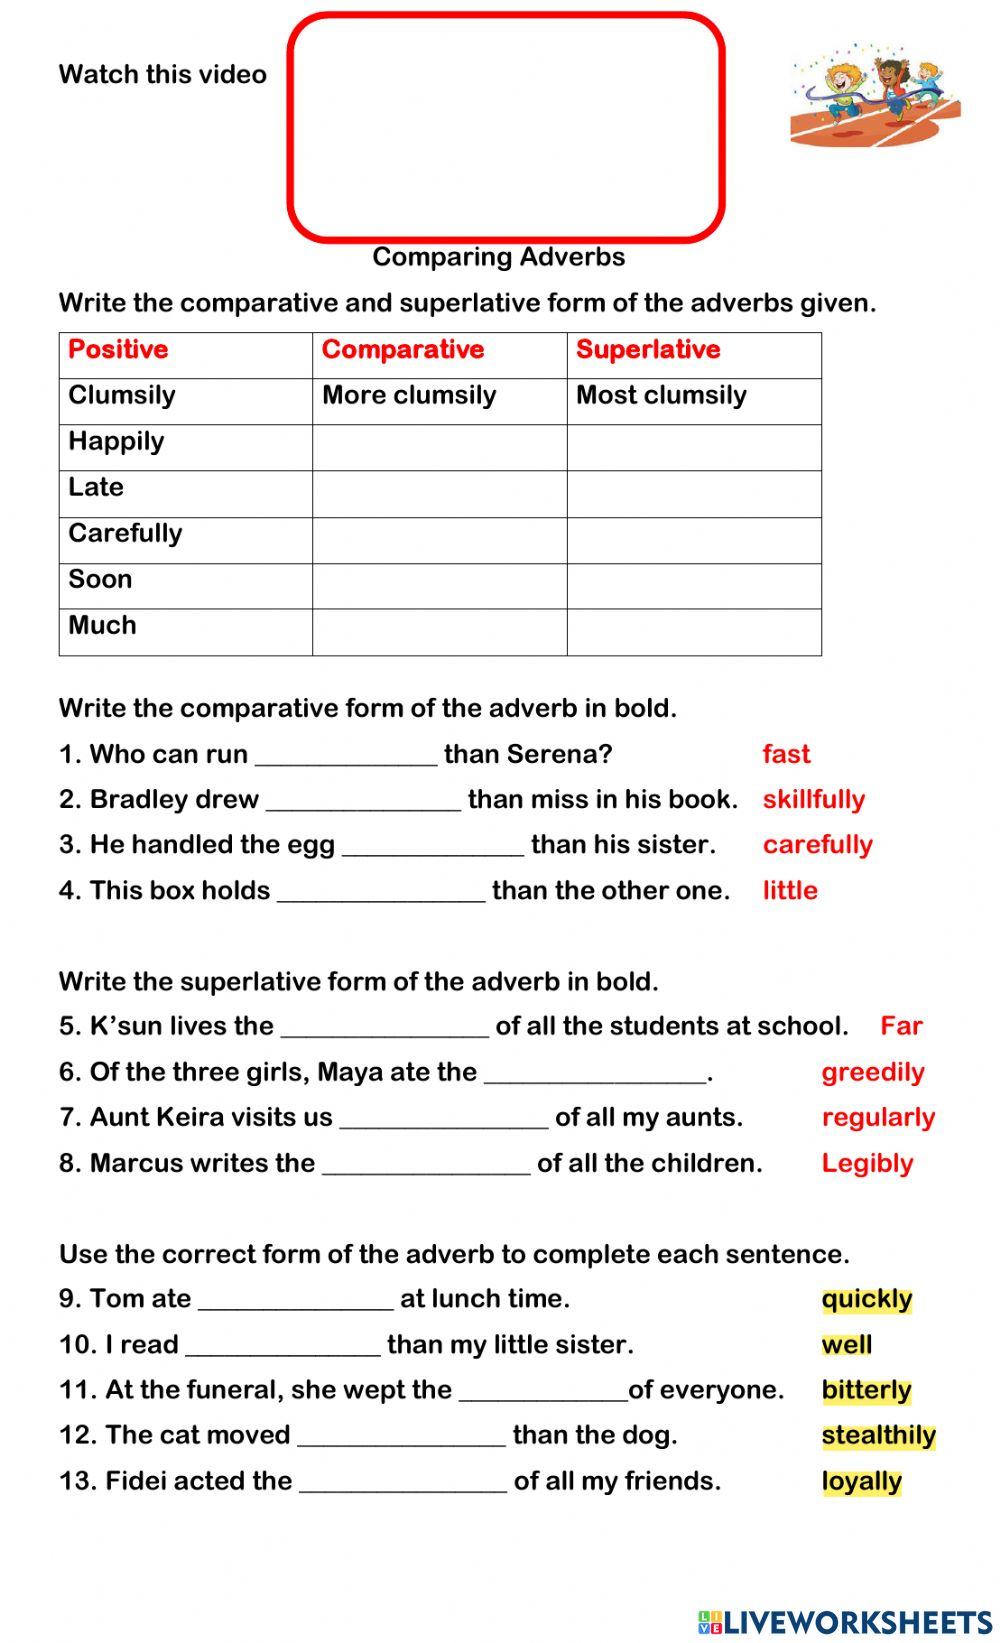 degree-of-comparison-of-adverbs-worksheets-pdf-adverbworksheets